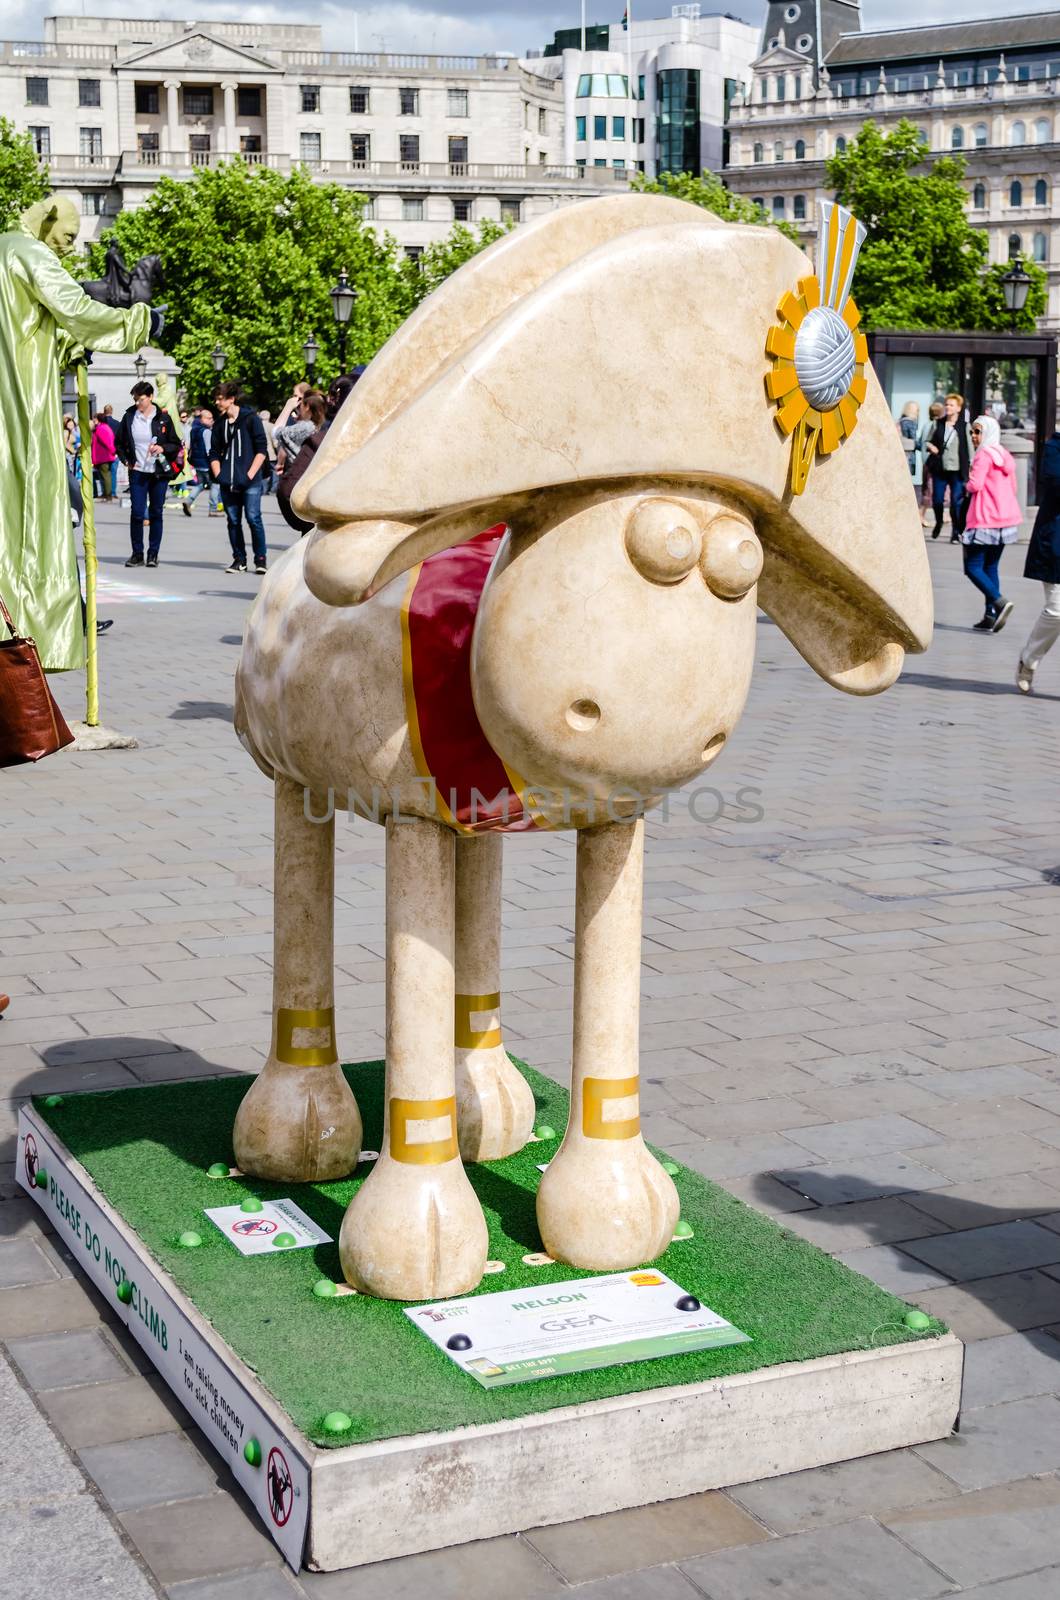 LONDON - MAY 28: Aardman's Shaun the Sheep character on display in Trafalgar Square, London, May 28, 2015.